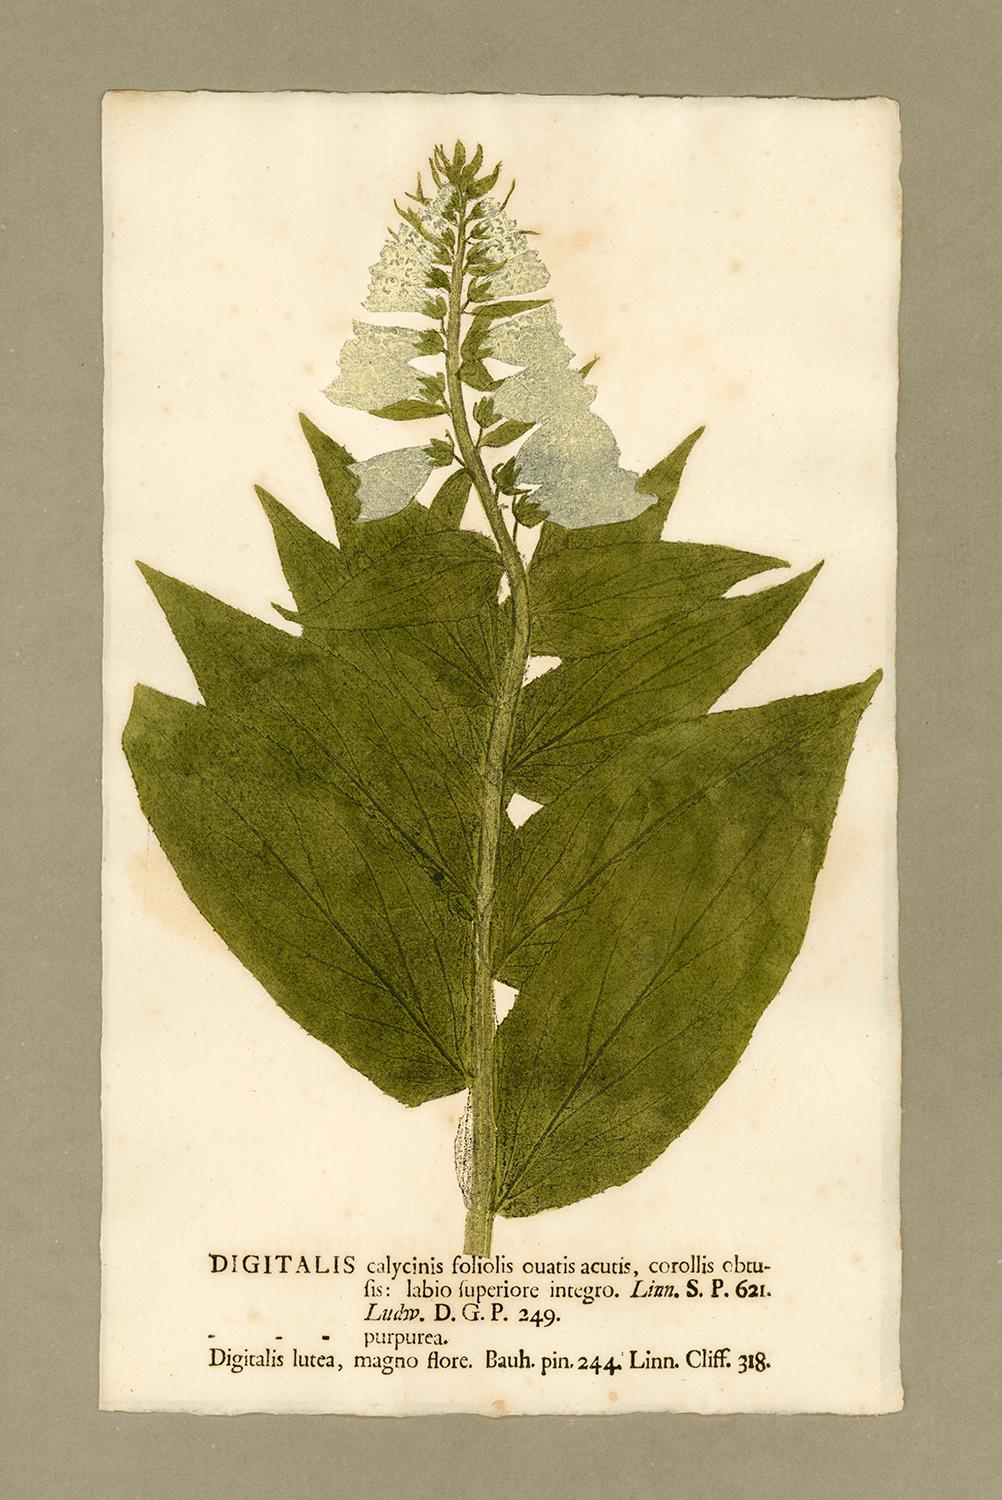 Johann Hieronymus Kniphof  Figurative Print - Botanica in Originali, seu Herbarium Vivum - "Nature Printed Plants" -18